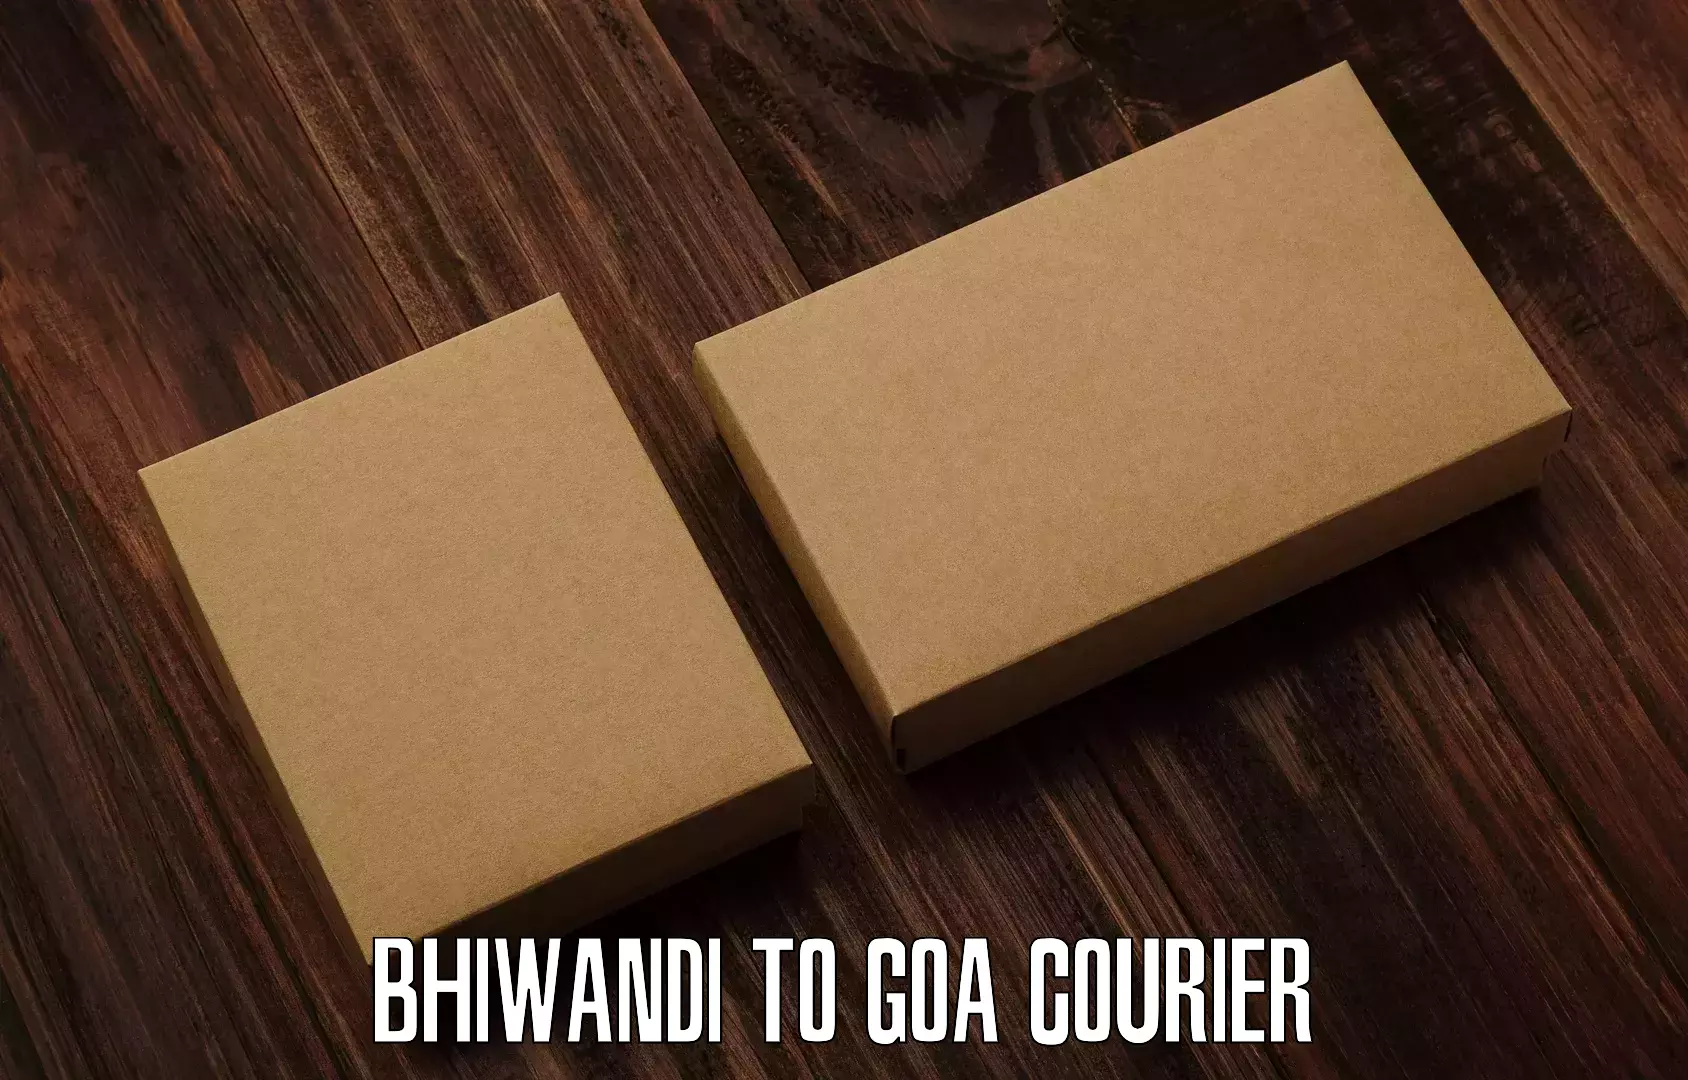 Courier service comparison Bhiwandi to Panjim